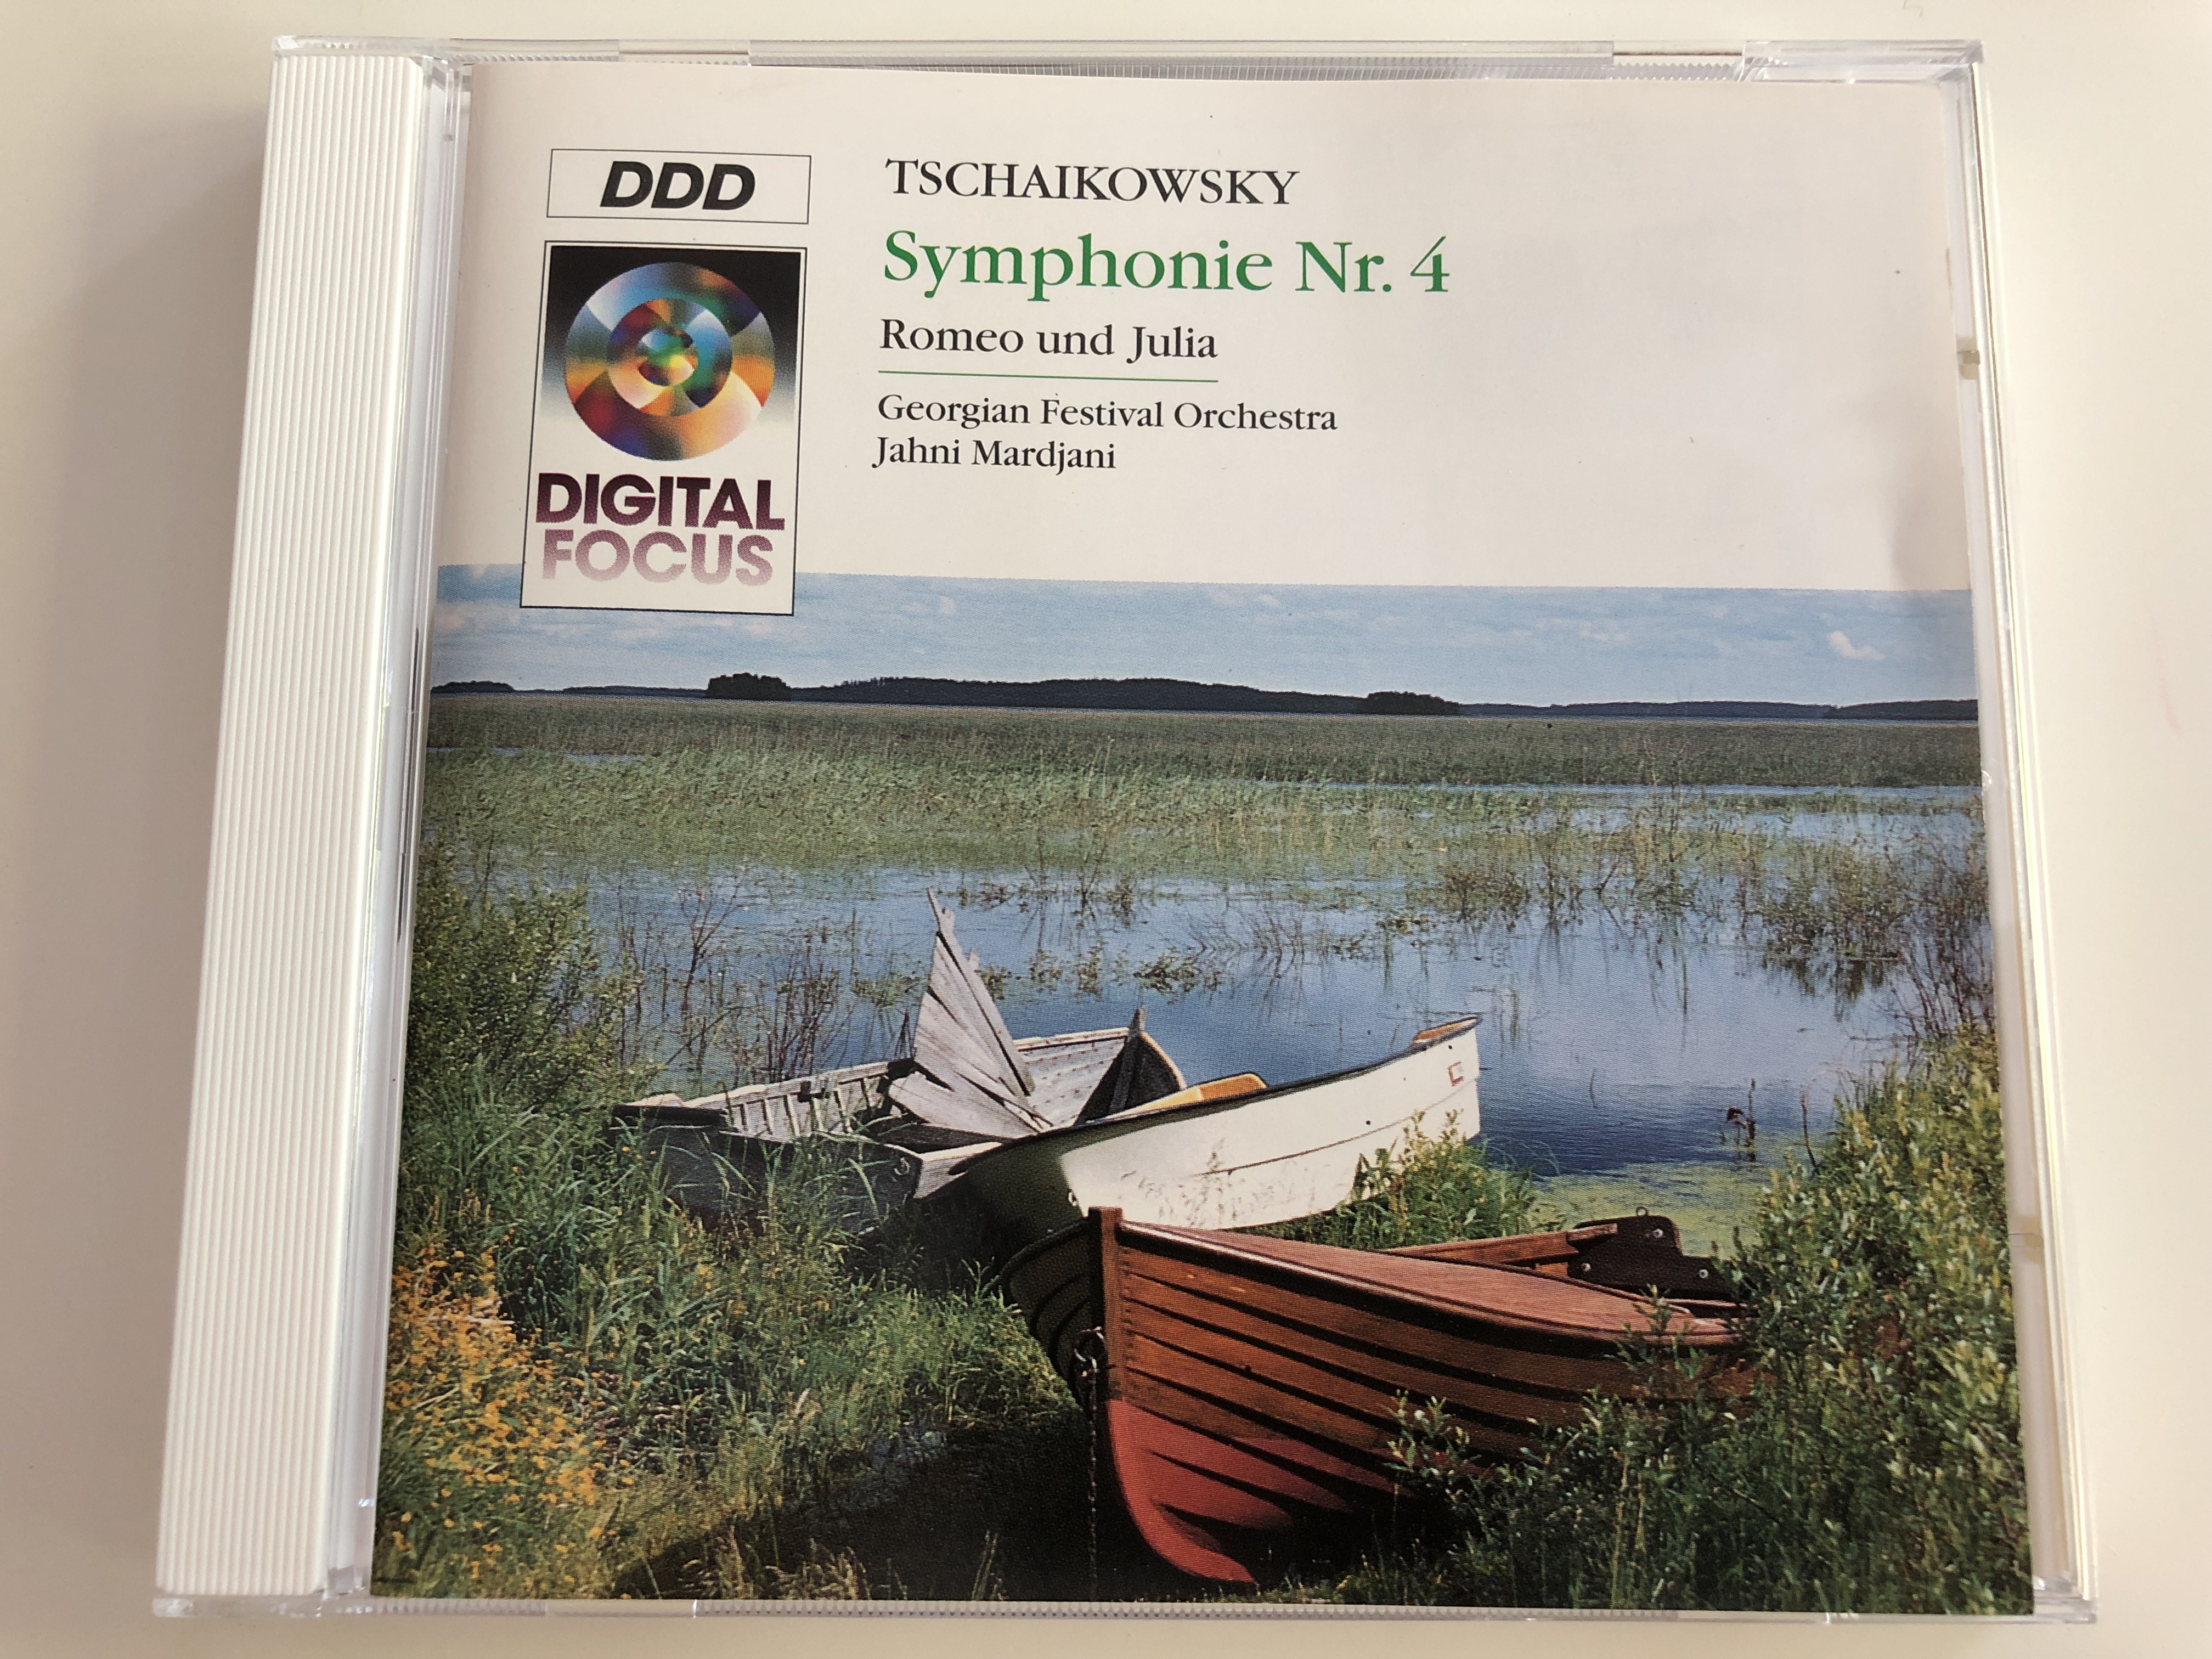 -tschaikowsky-symphonie-nr.-4-romeo-und-julia-georgian-festival-orchestra-cond.-jahni-mardjani-audio-cd-1994-qk-64292-1-.jpg